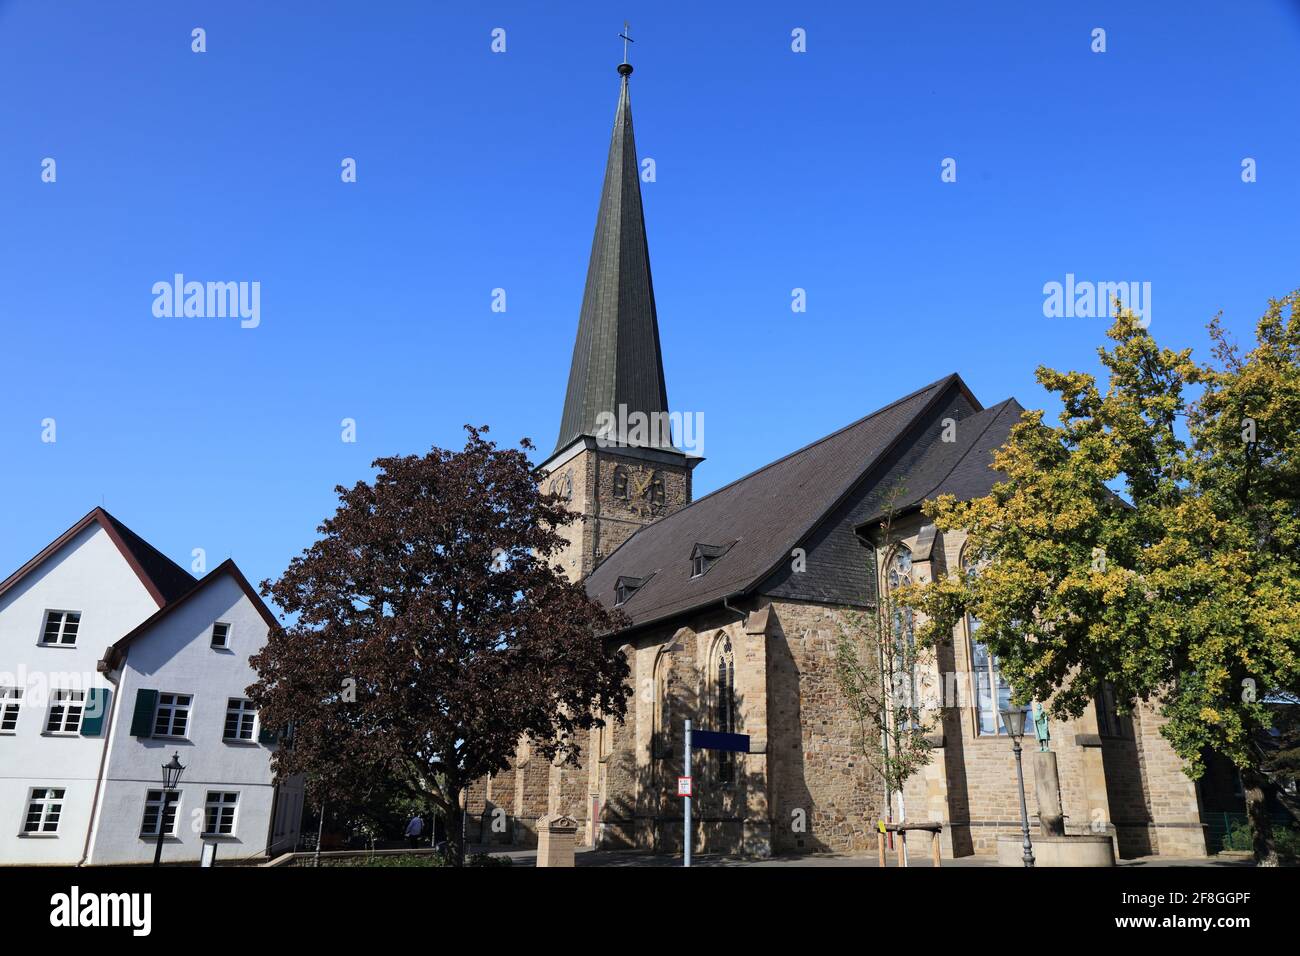 Muelheim an der Ruhr city in Germany. Old Town architecture in Kirchenhuegel area. Petrikirche - Evangelical Lutheran protestant church. Stock Photo